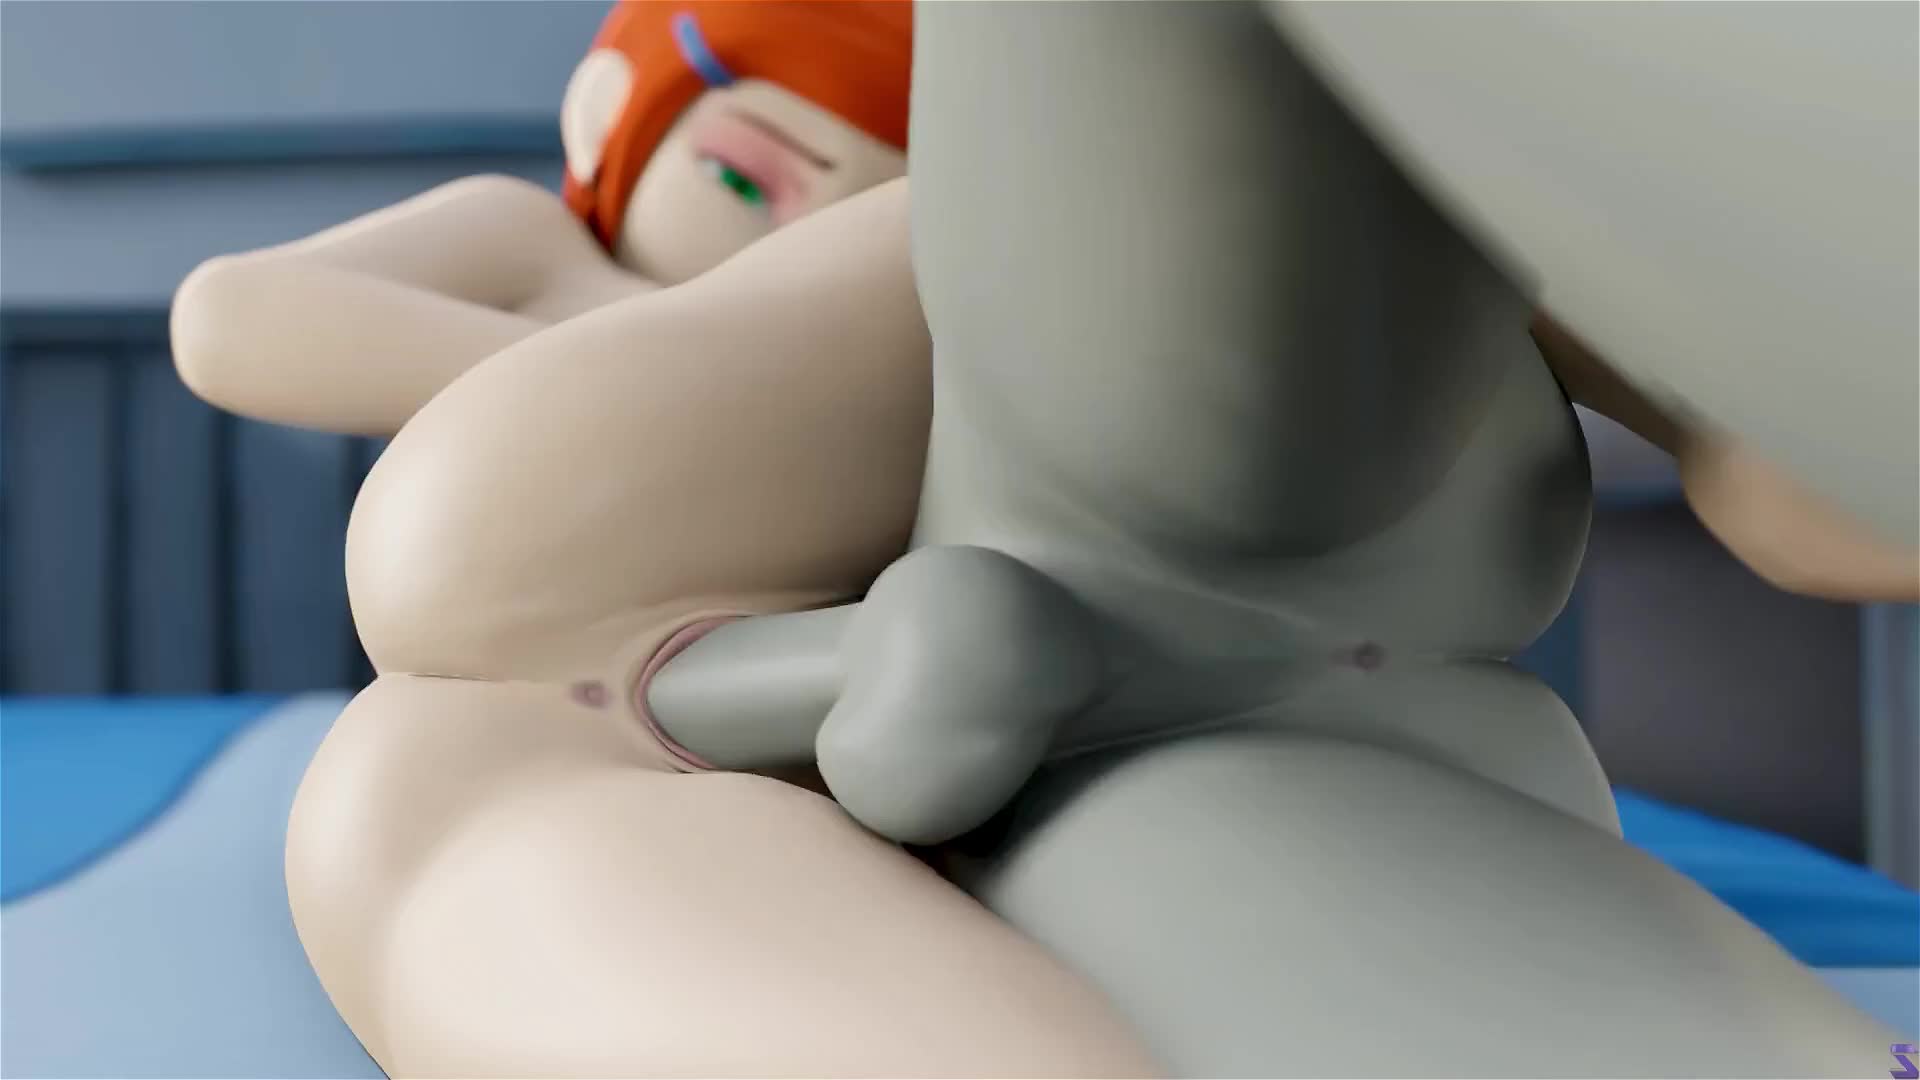 Futanari Rachel Roth and Gwen’s hot sex in the bedroom – Ben 10 NSFW animation thumbnail